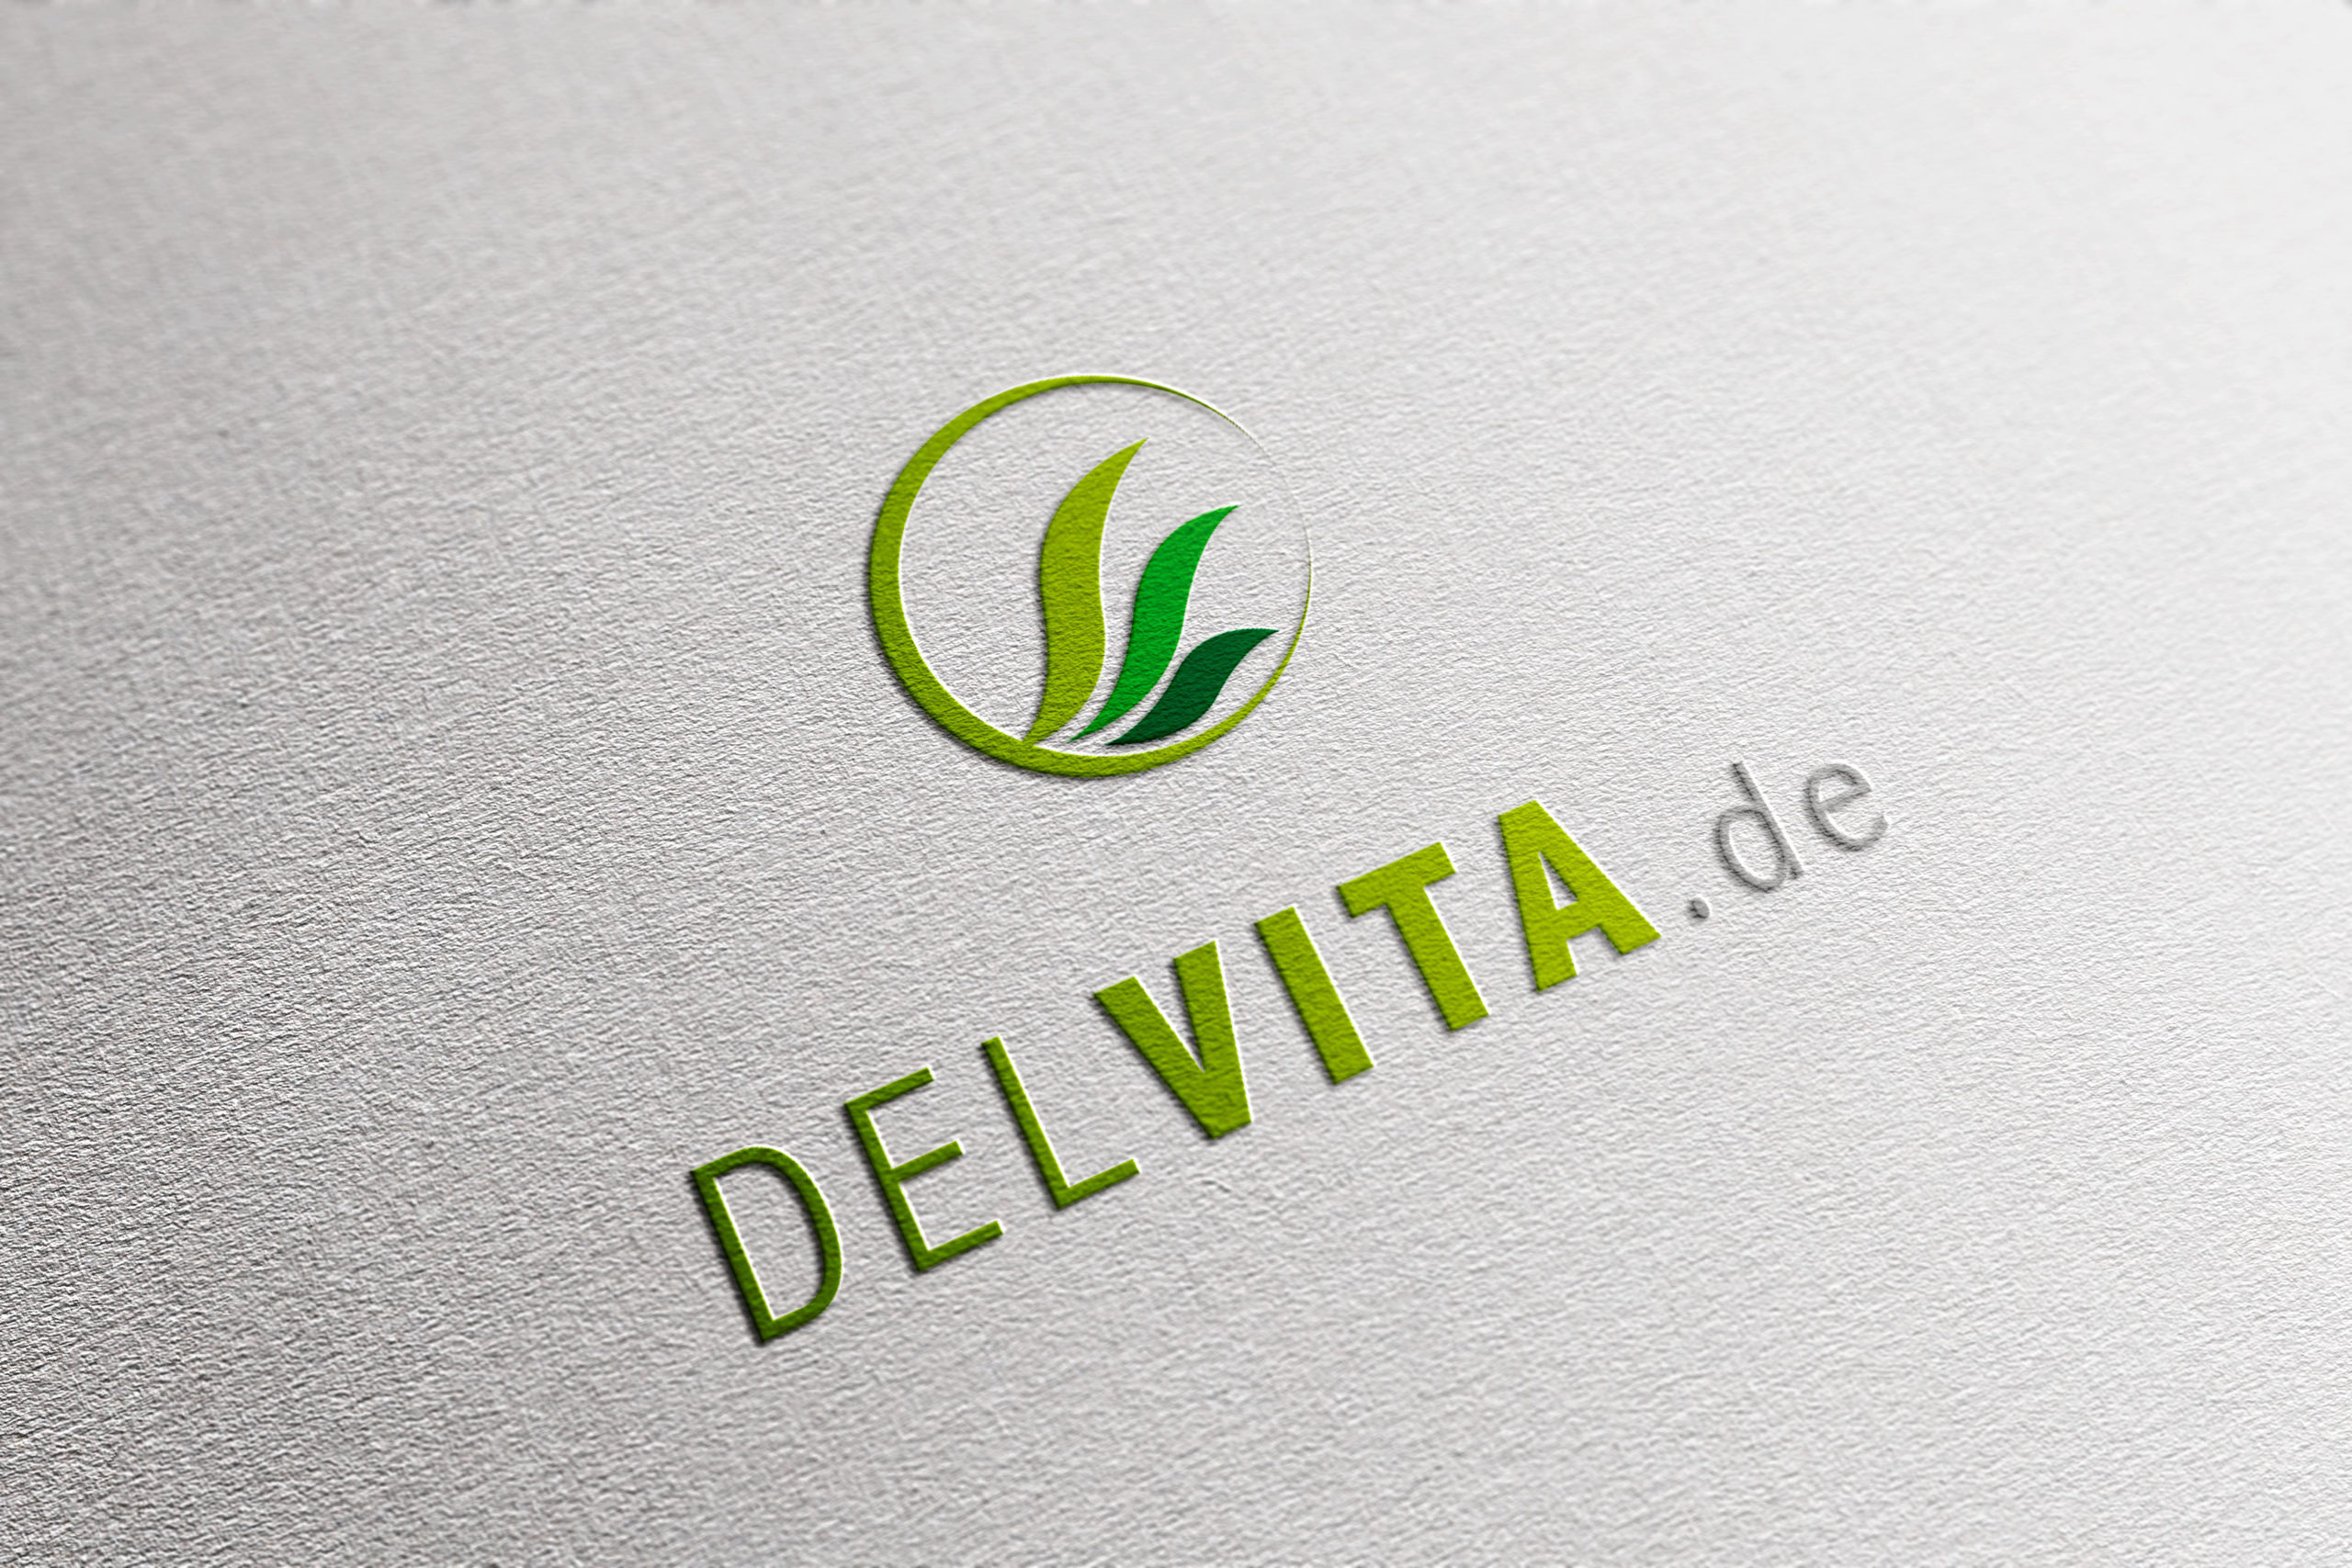 Delvita Logo